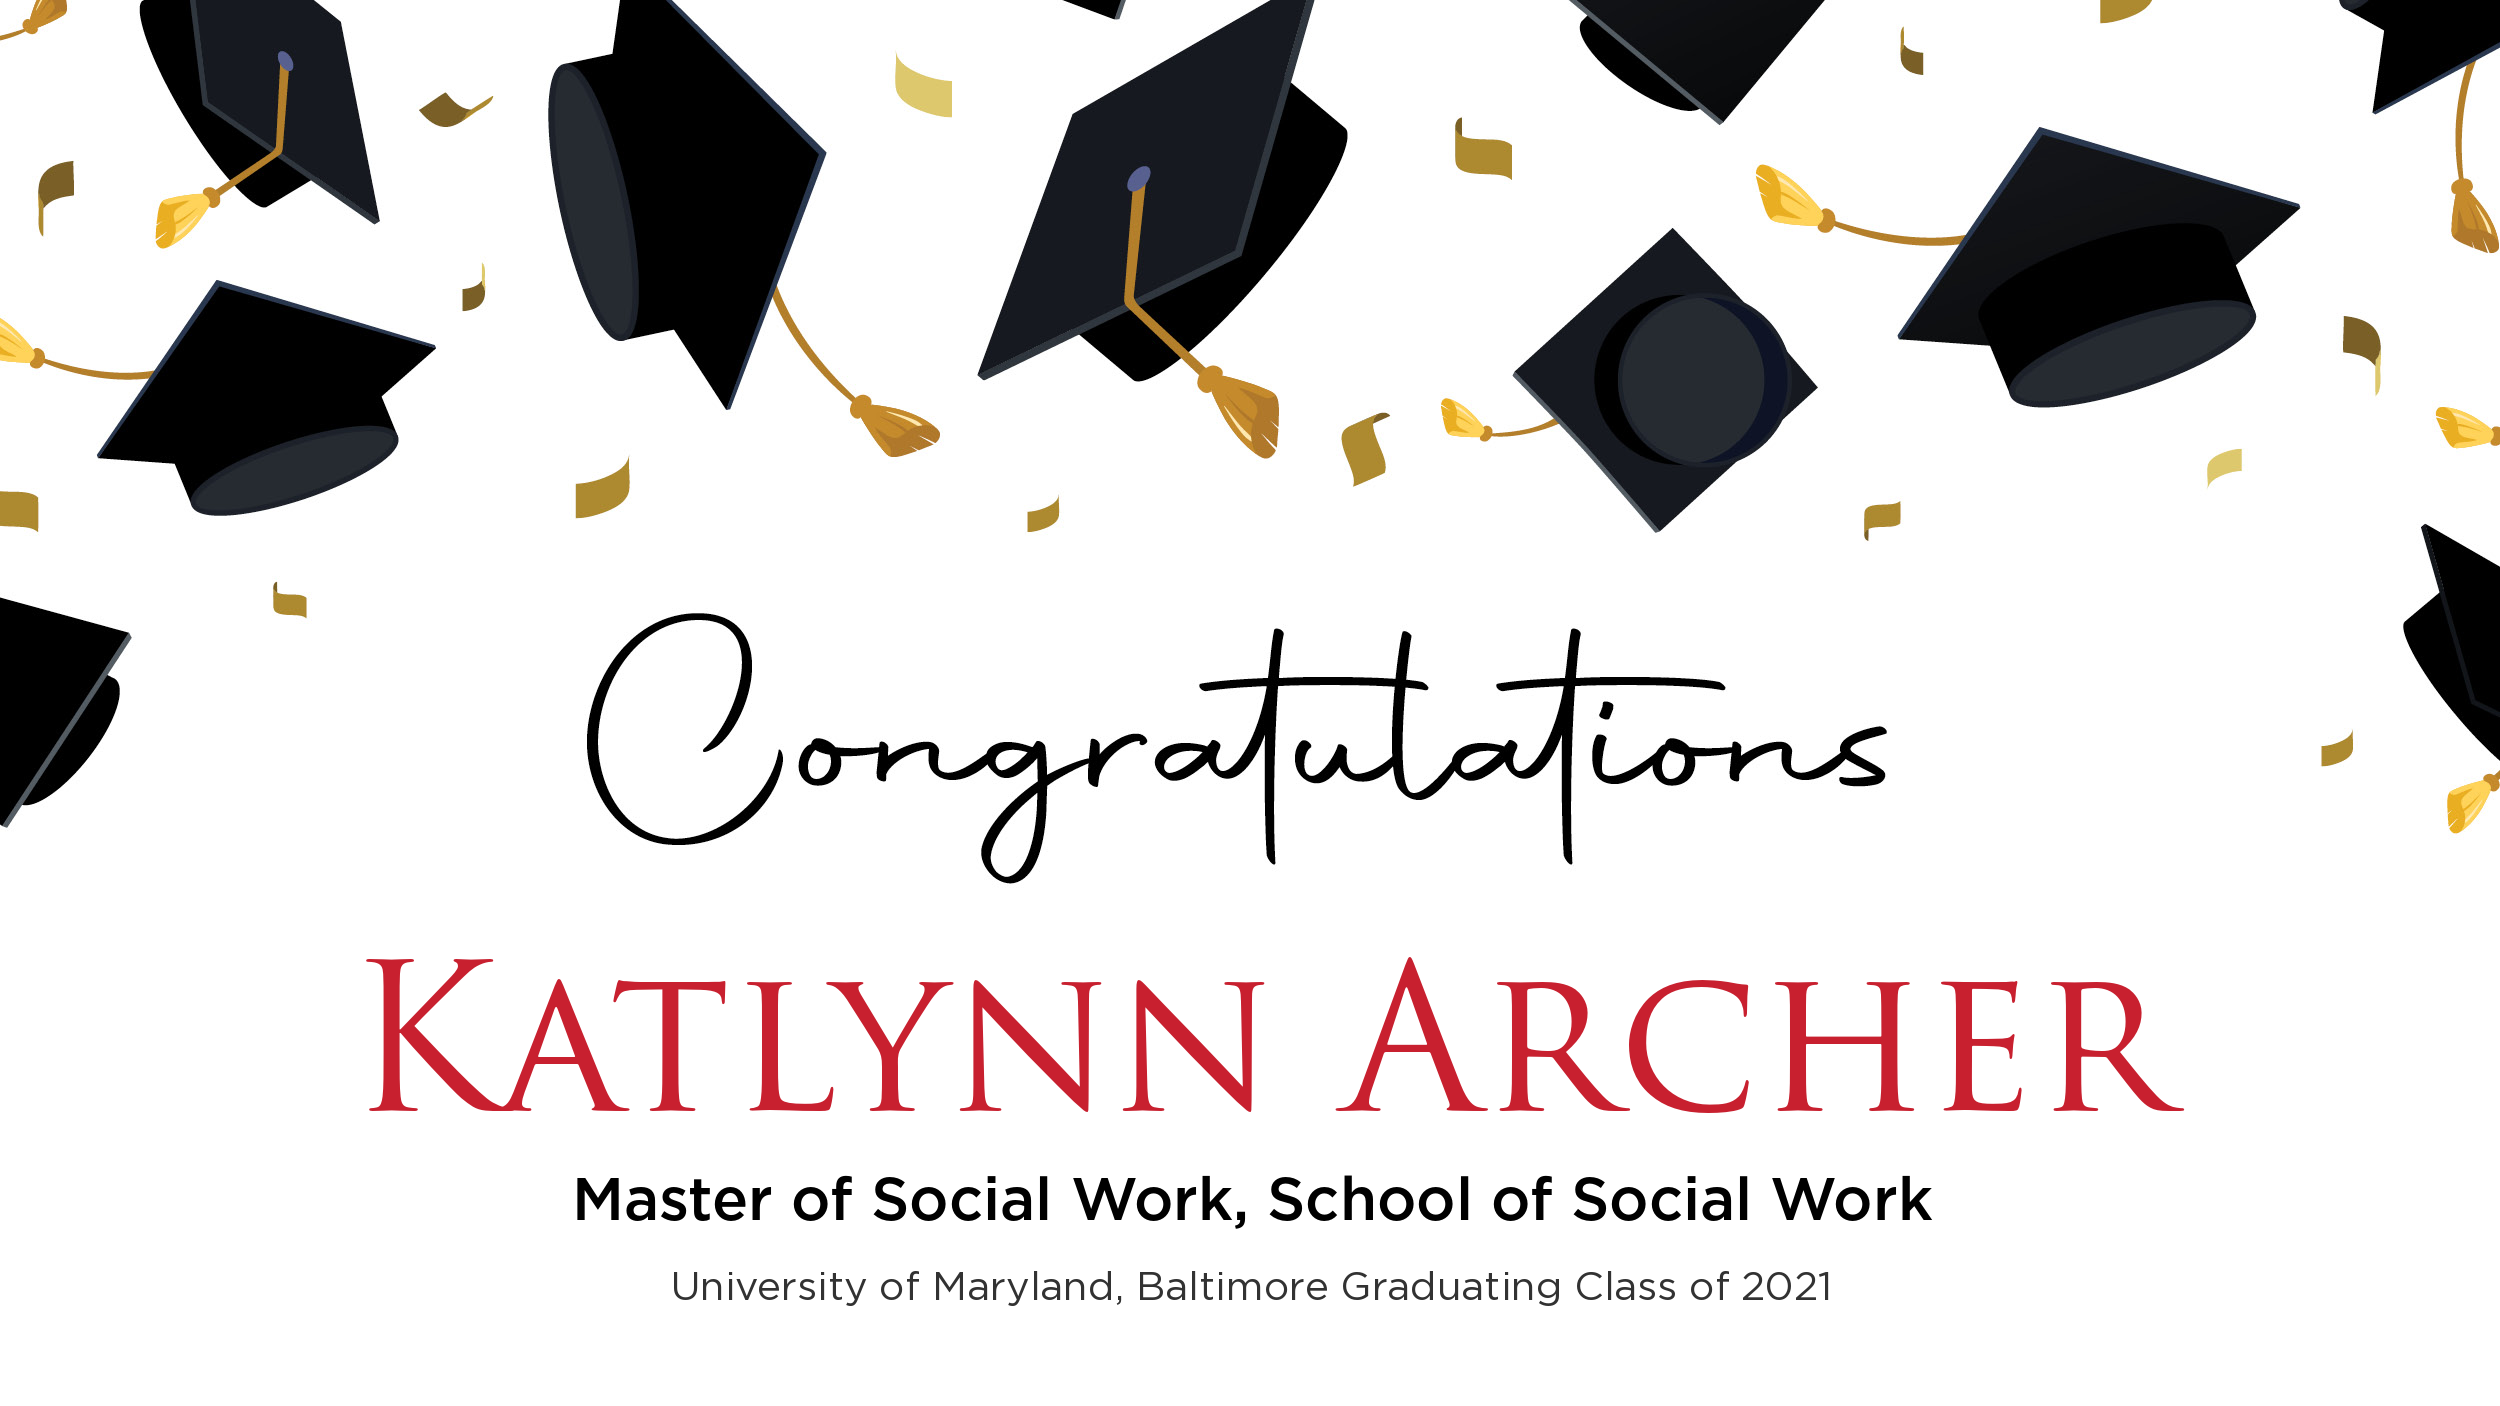 Congratulations Katlynn Archer, Master of Social Work